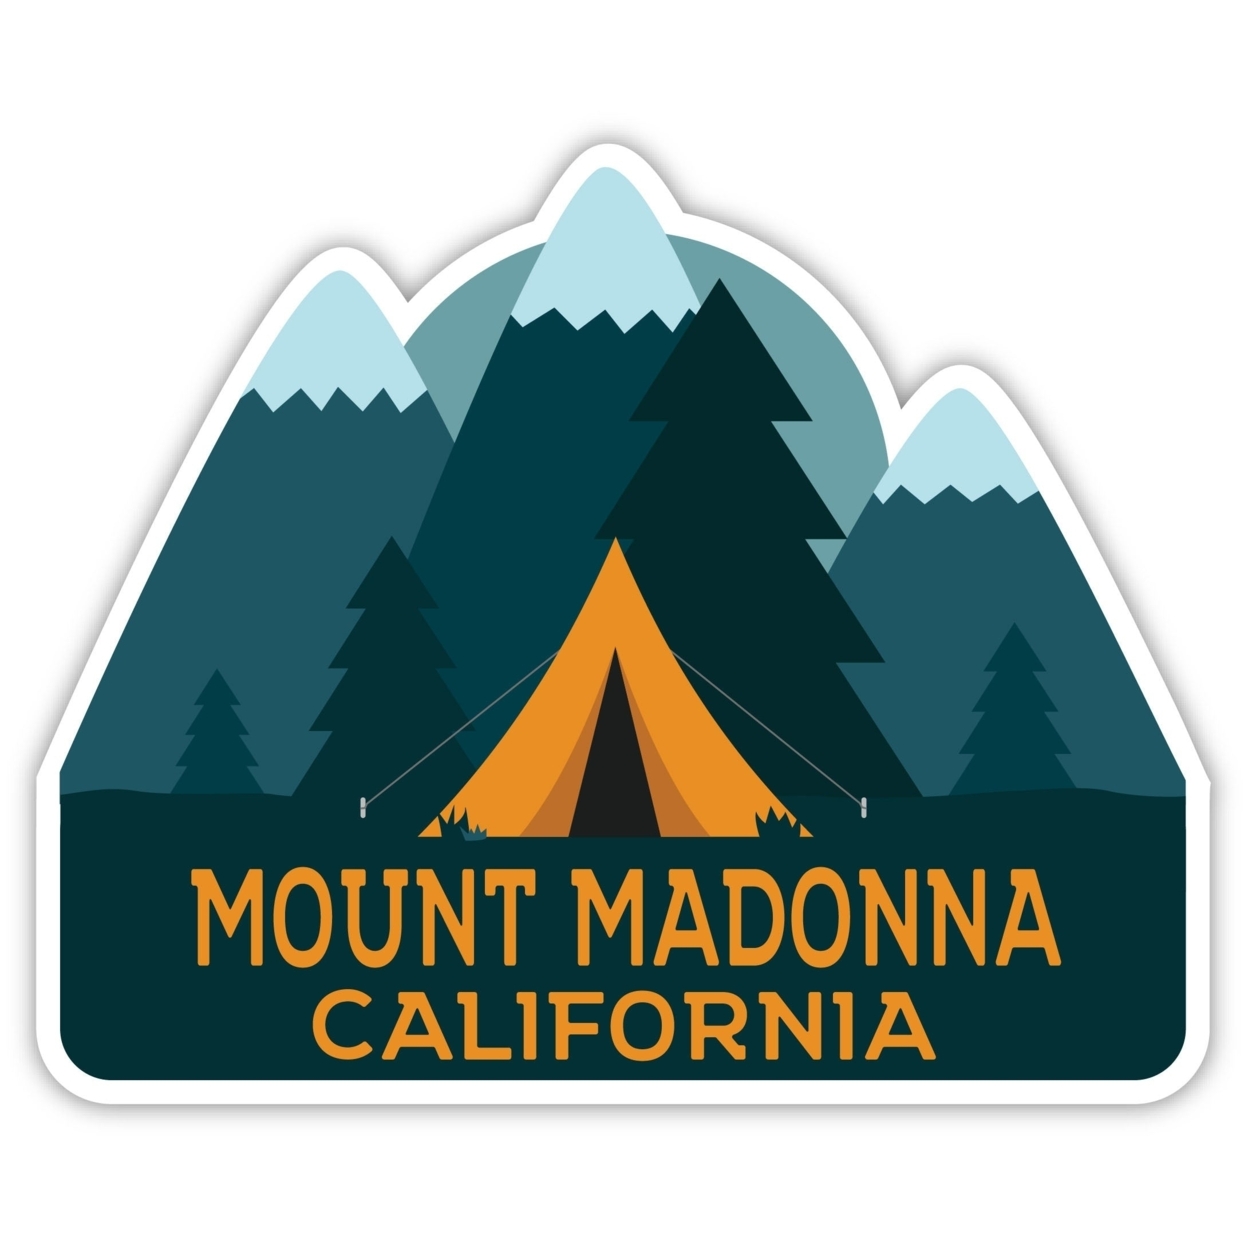 Mount Madonna California Souvenir Decorative Stickers (Choose Theme And Size) - Single Unit, 4-Inch, Camp Life